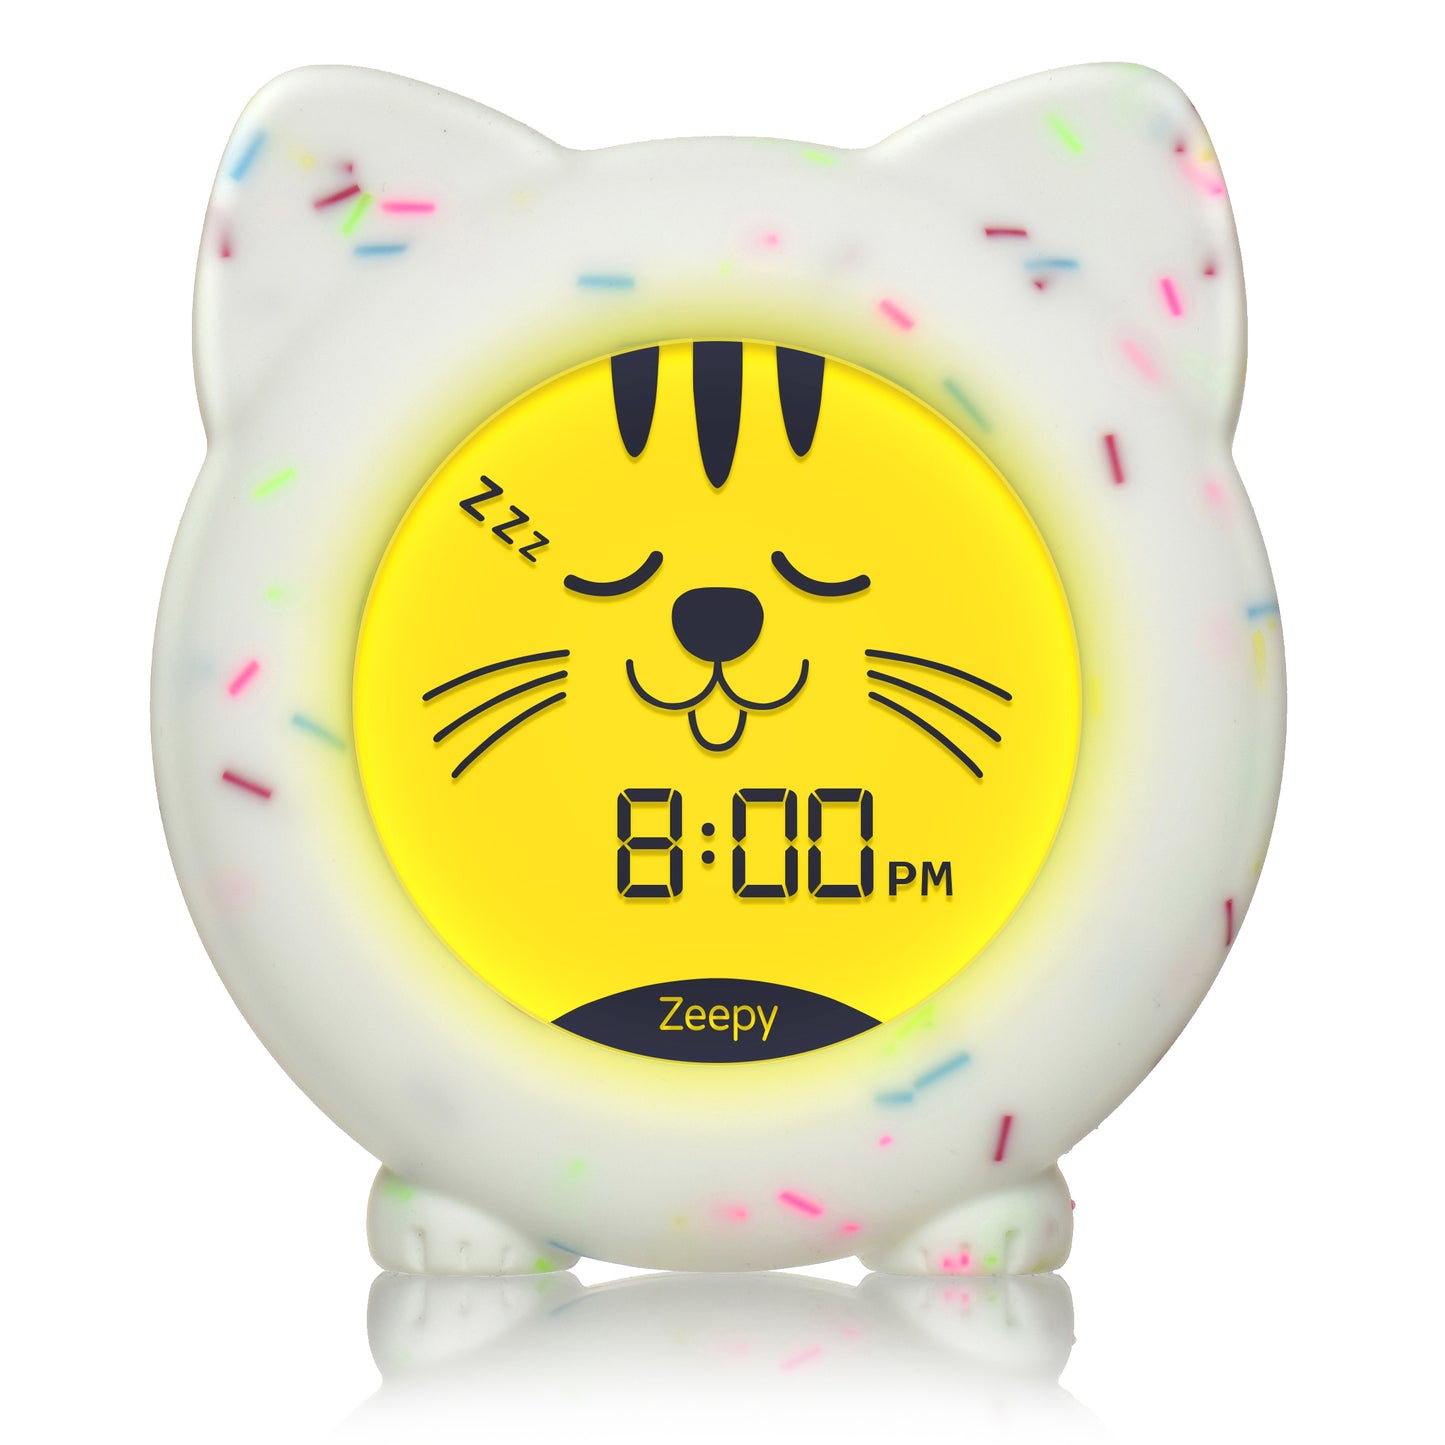 Zeepy Toddler Sleep Trainer Clock - Kip the Kitty